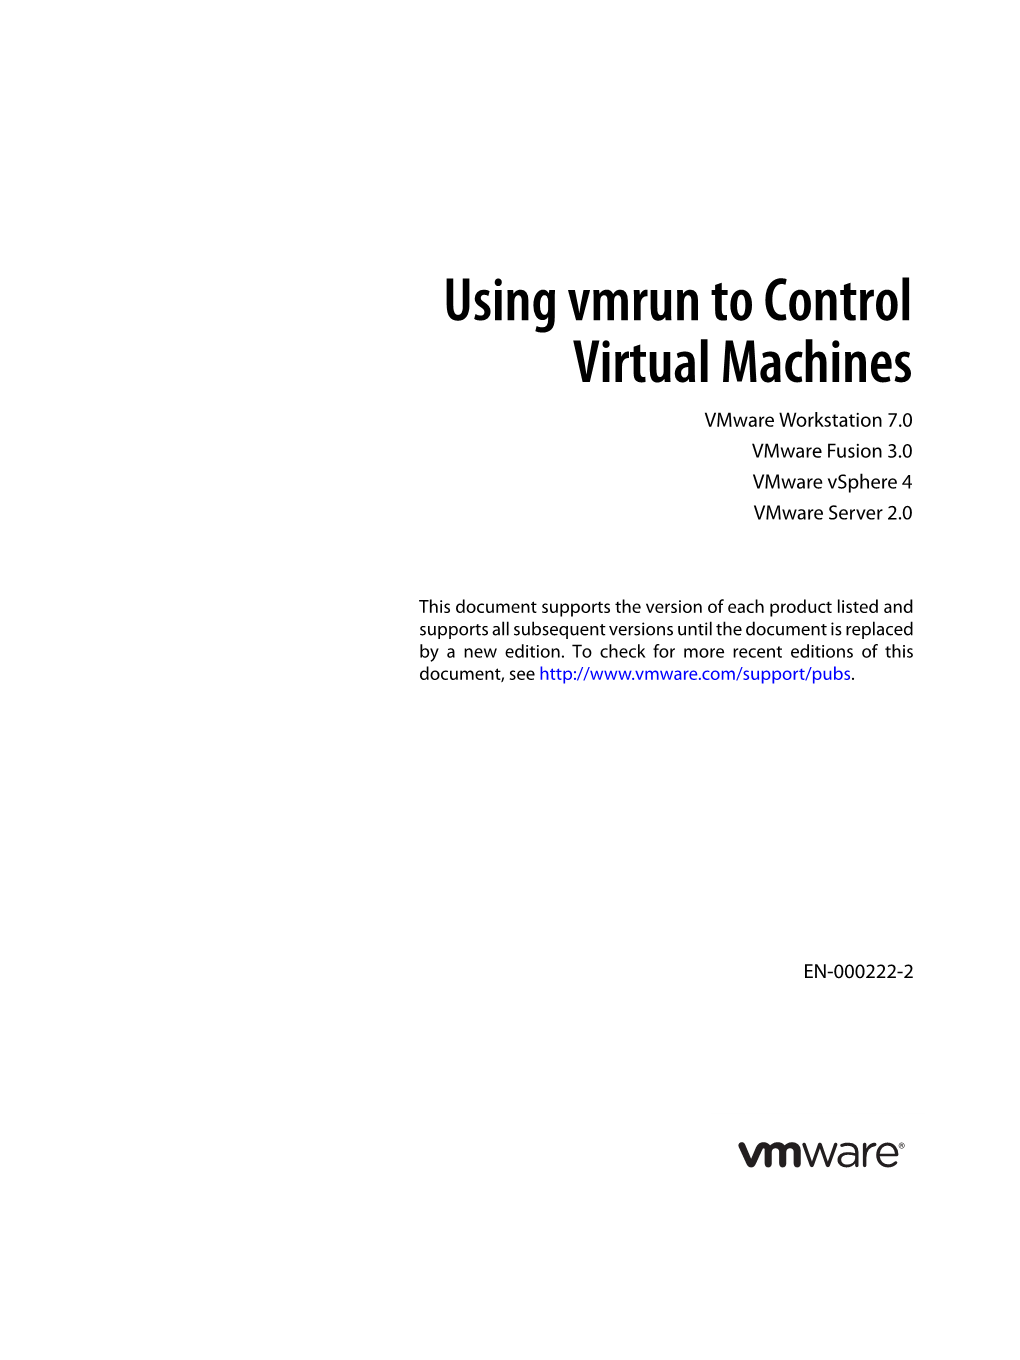 Using Vmrun to Control Virtual Machines Vmware Workstation 7.0 Vmware Fusion 3.0 Vmware Vsphere 4 Vmware Server 2.0